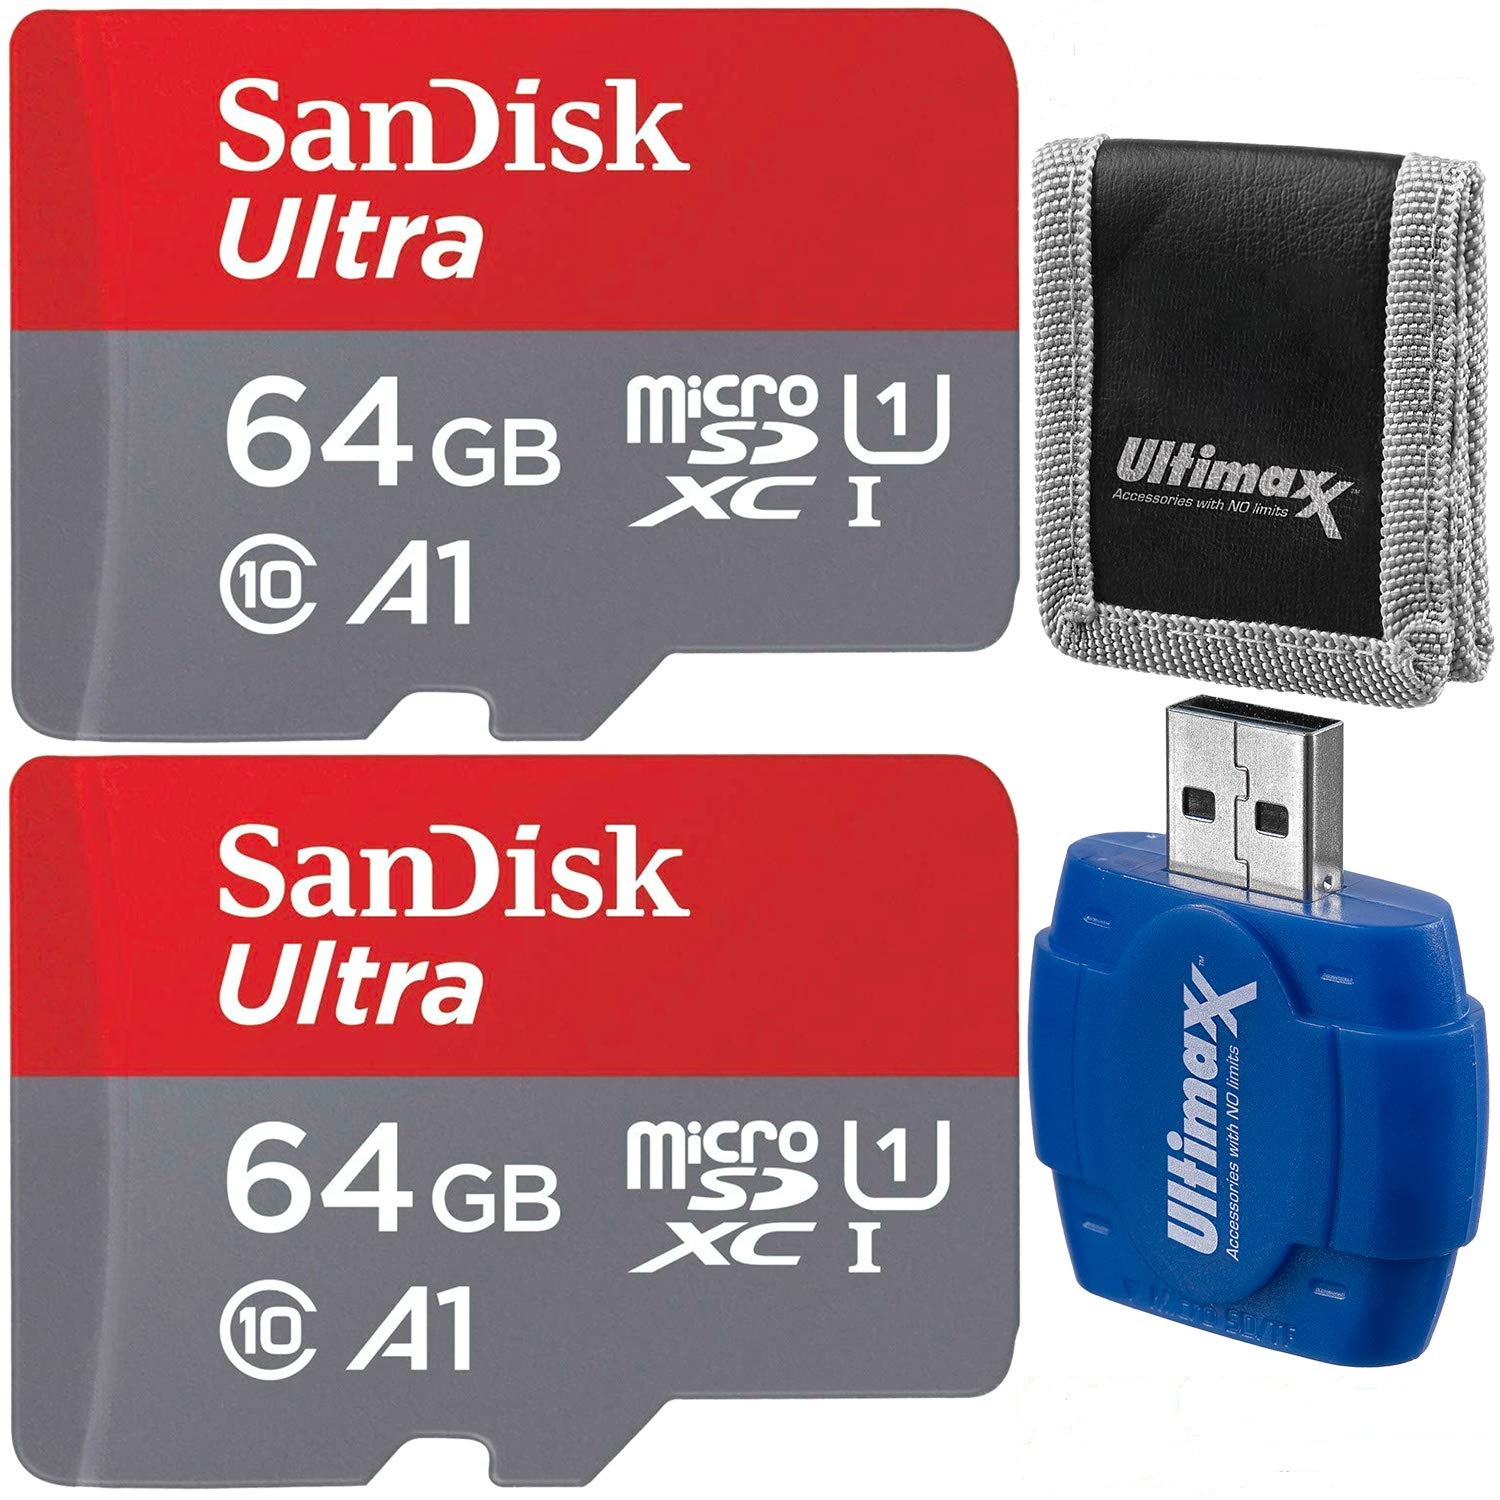 Dual SanDisk Ultra 64GB microS